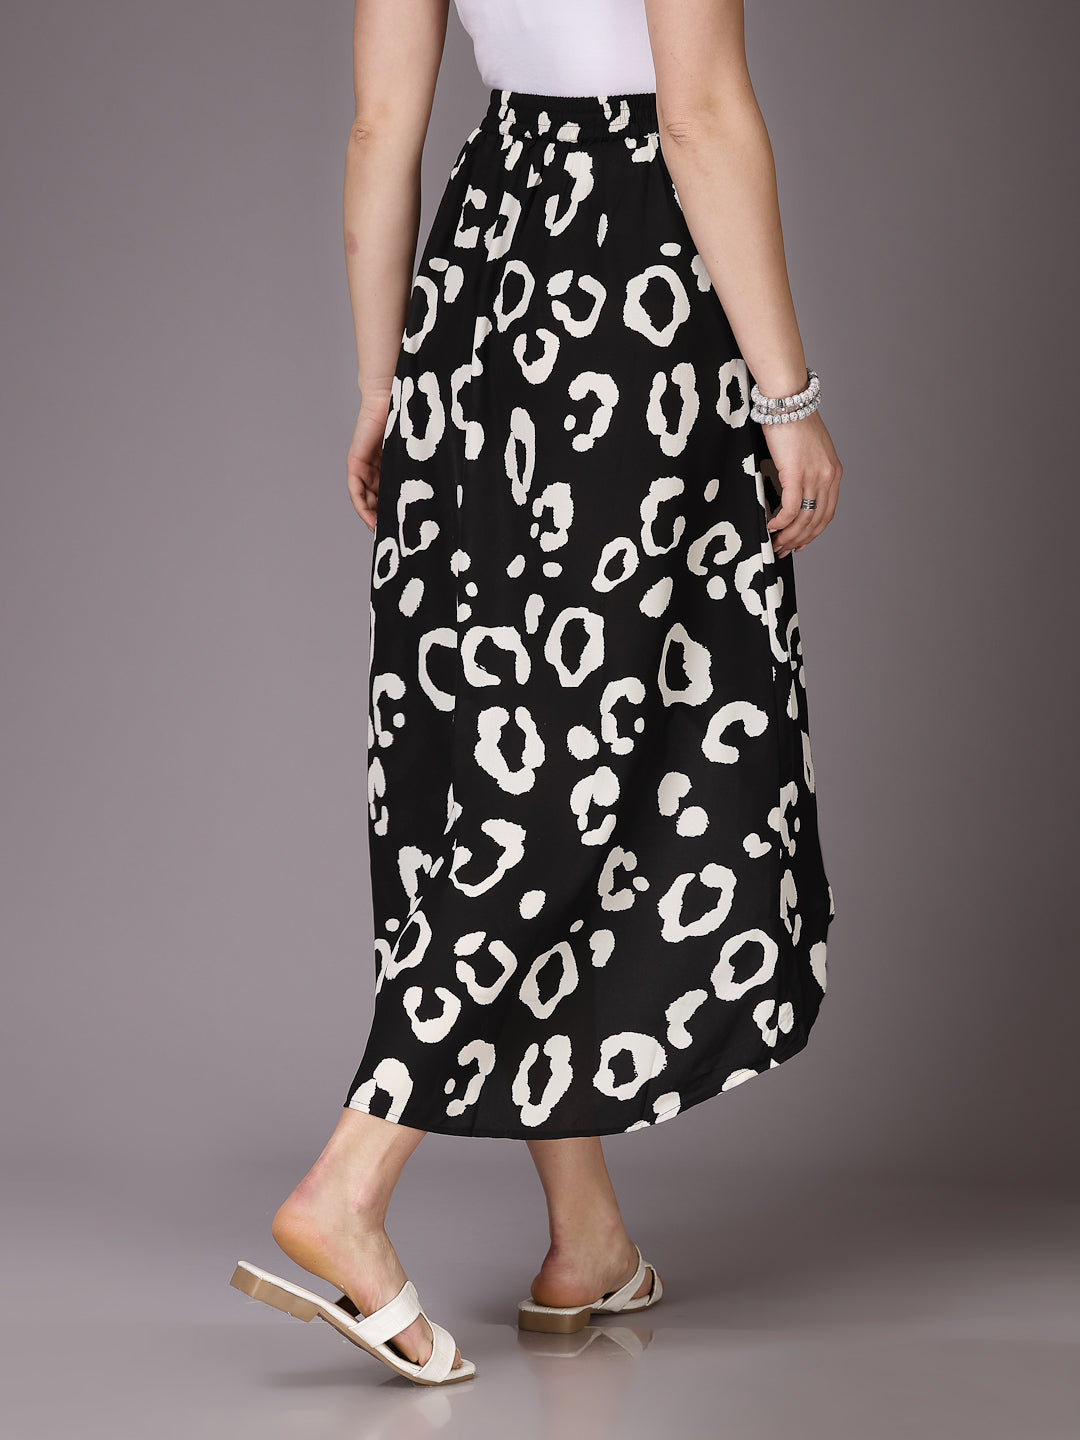 Shop Women Printed Skirts Online.